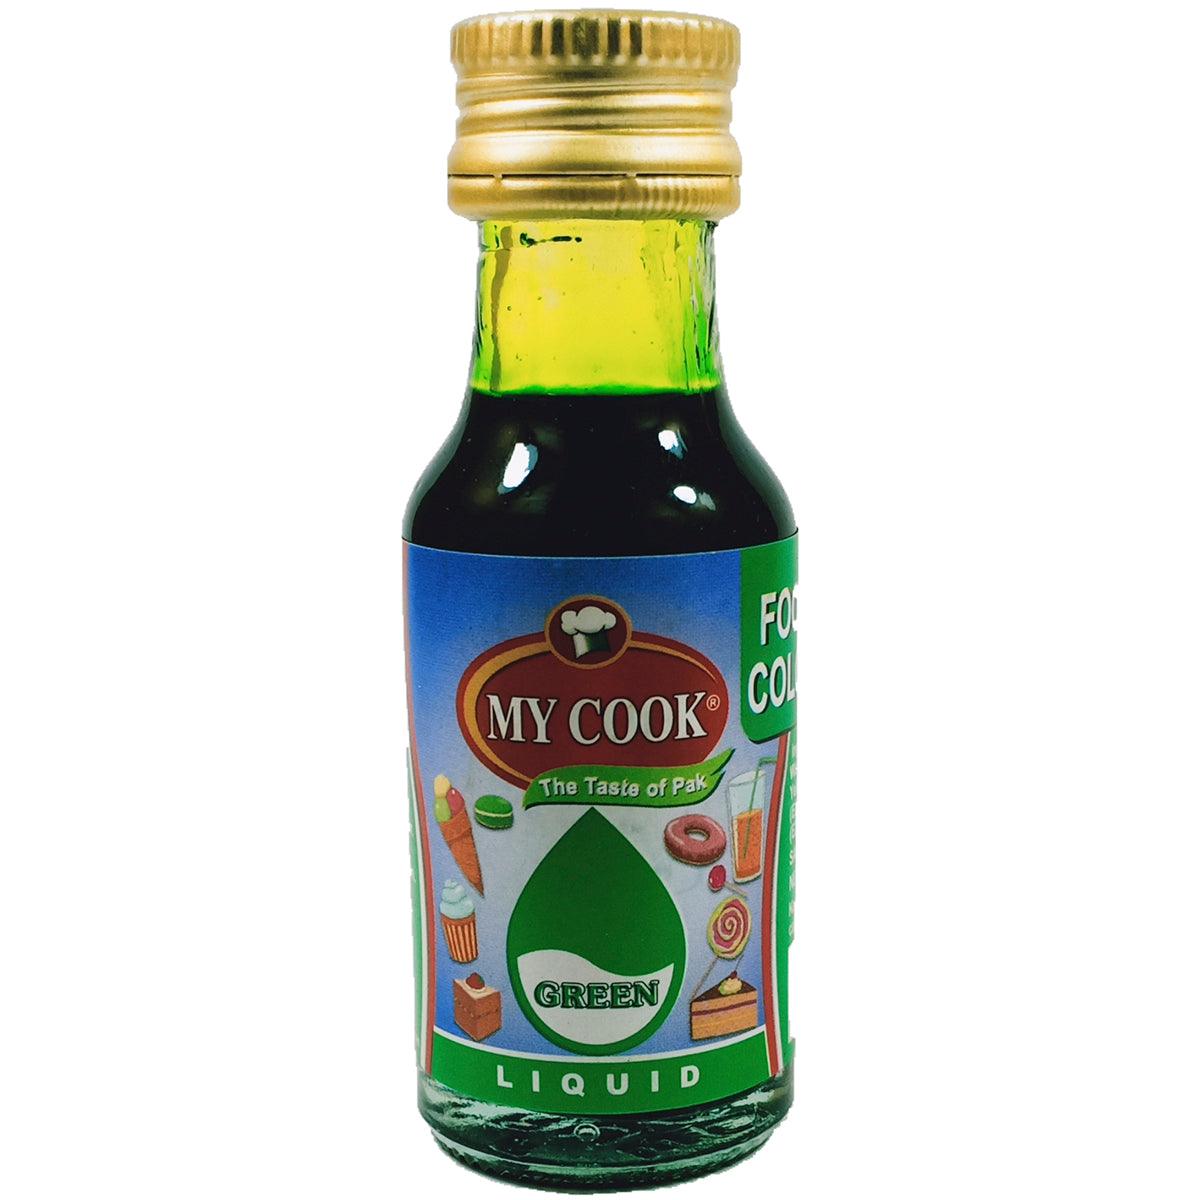 MY COOK GREEN LIQUID FOOD COLOR 28 - Nazar Jan's Supermarket